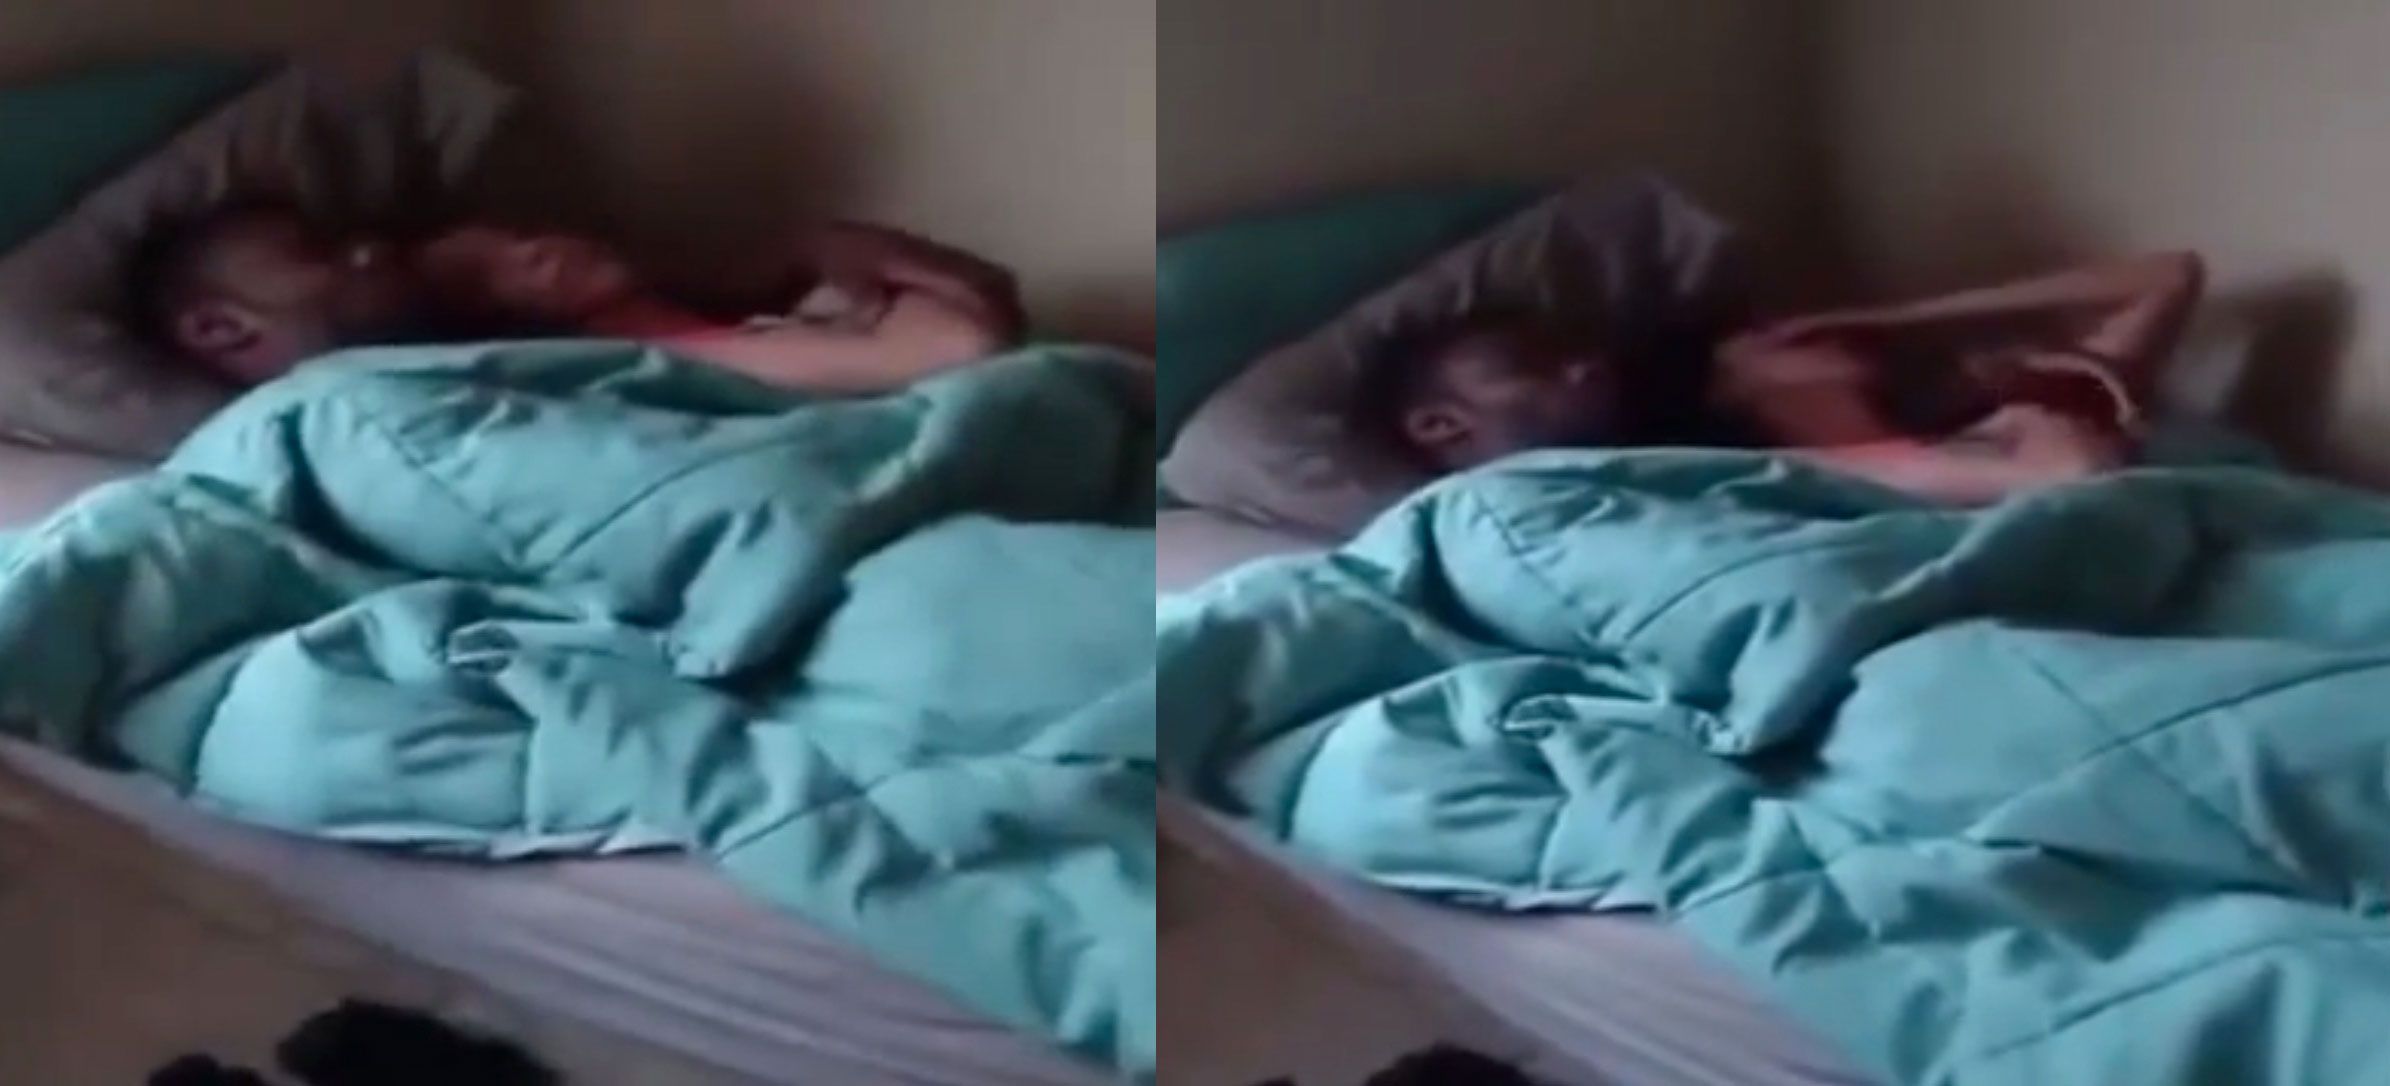 cheating while girlfriend sleeps